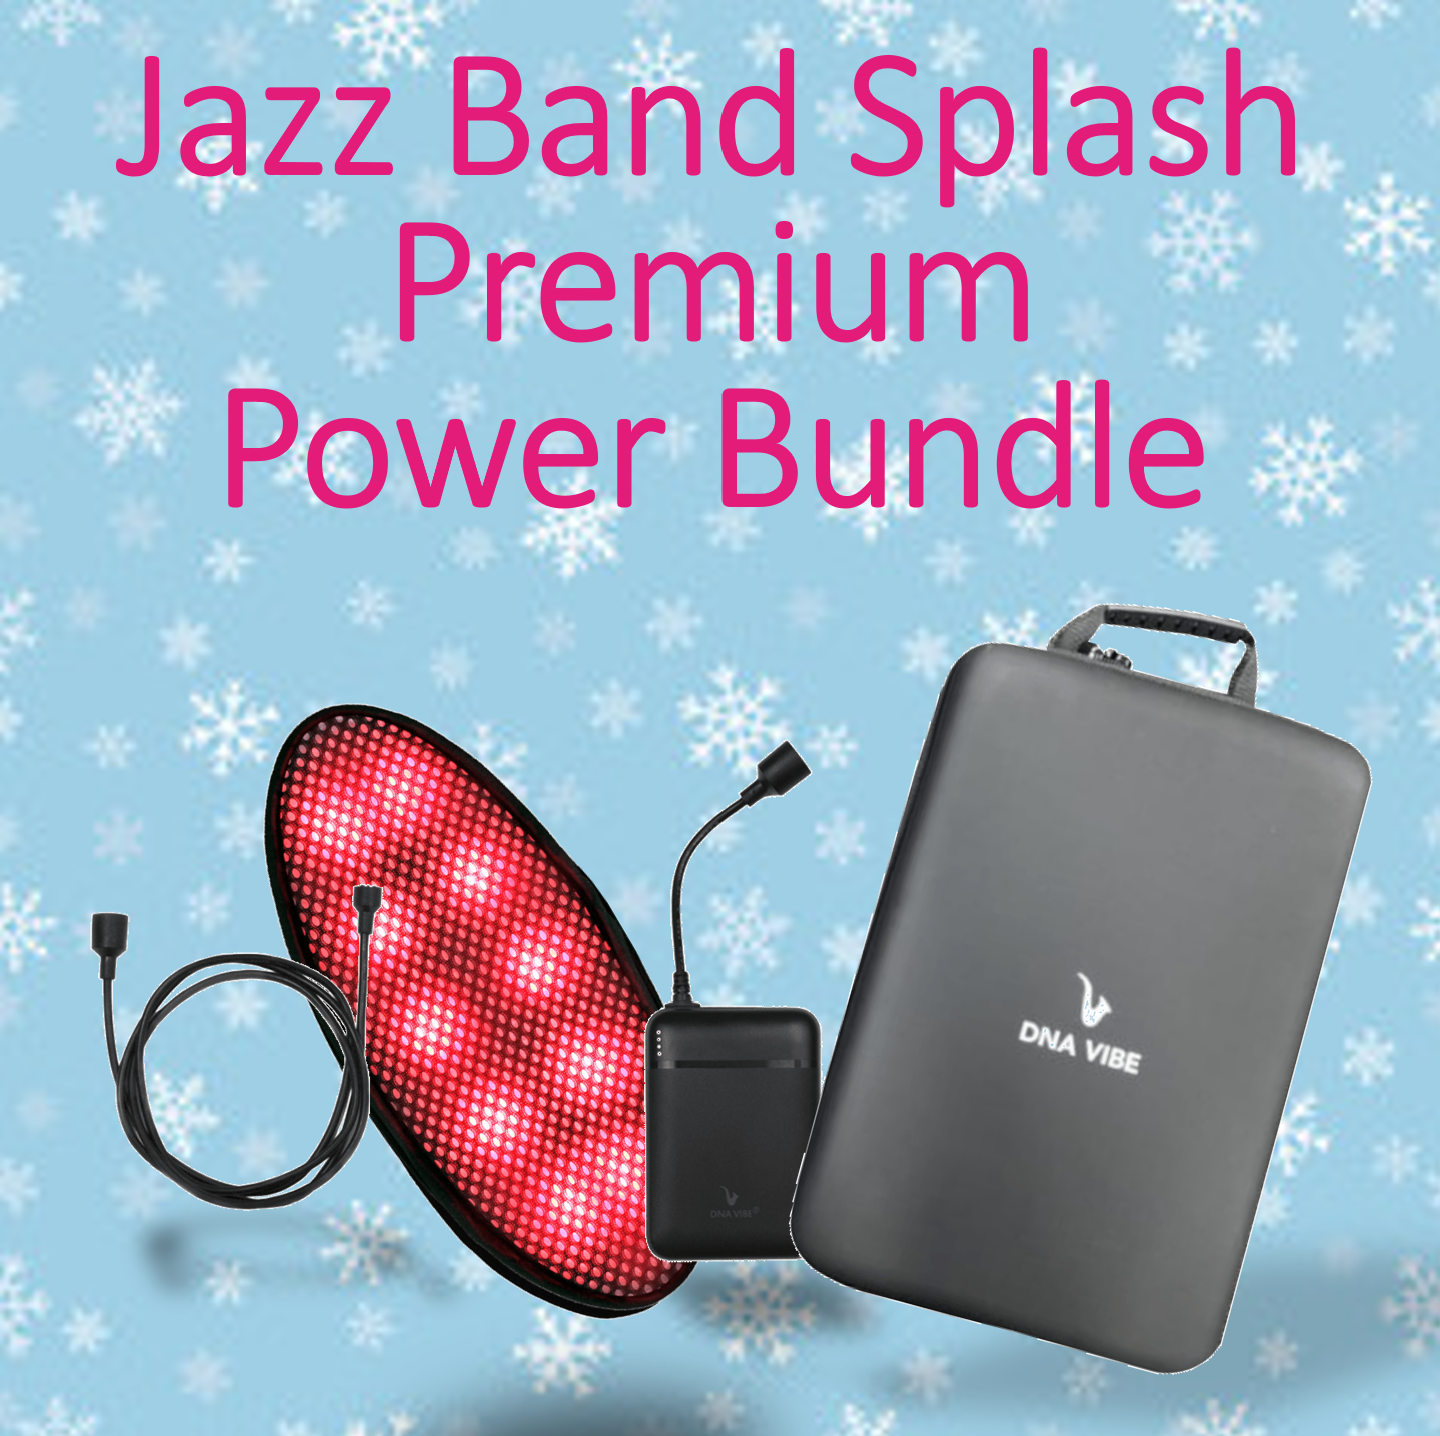 Jazz Band Splash Premium Power Bundle